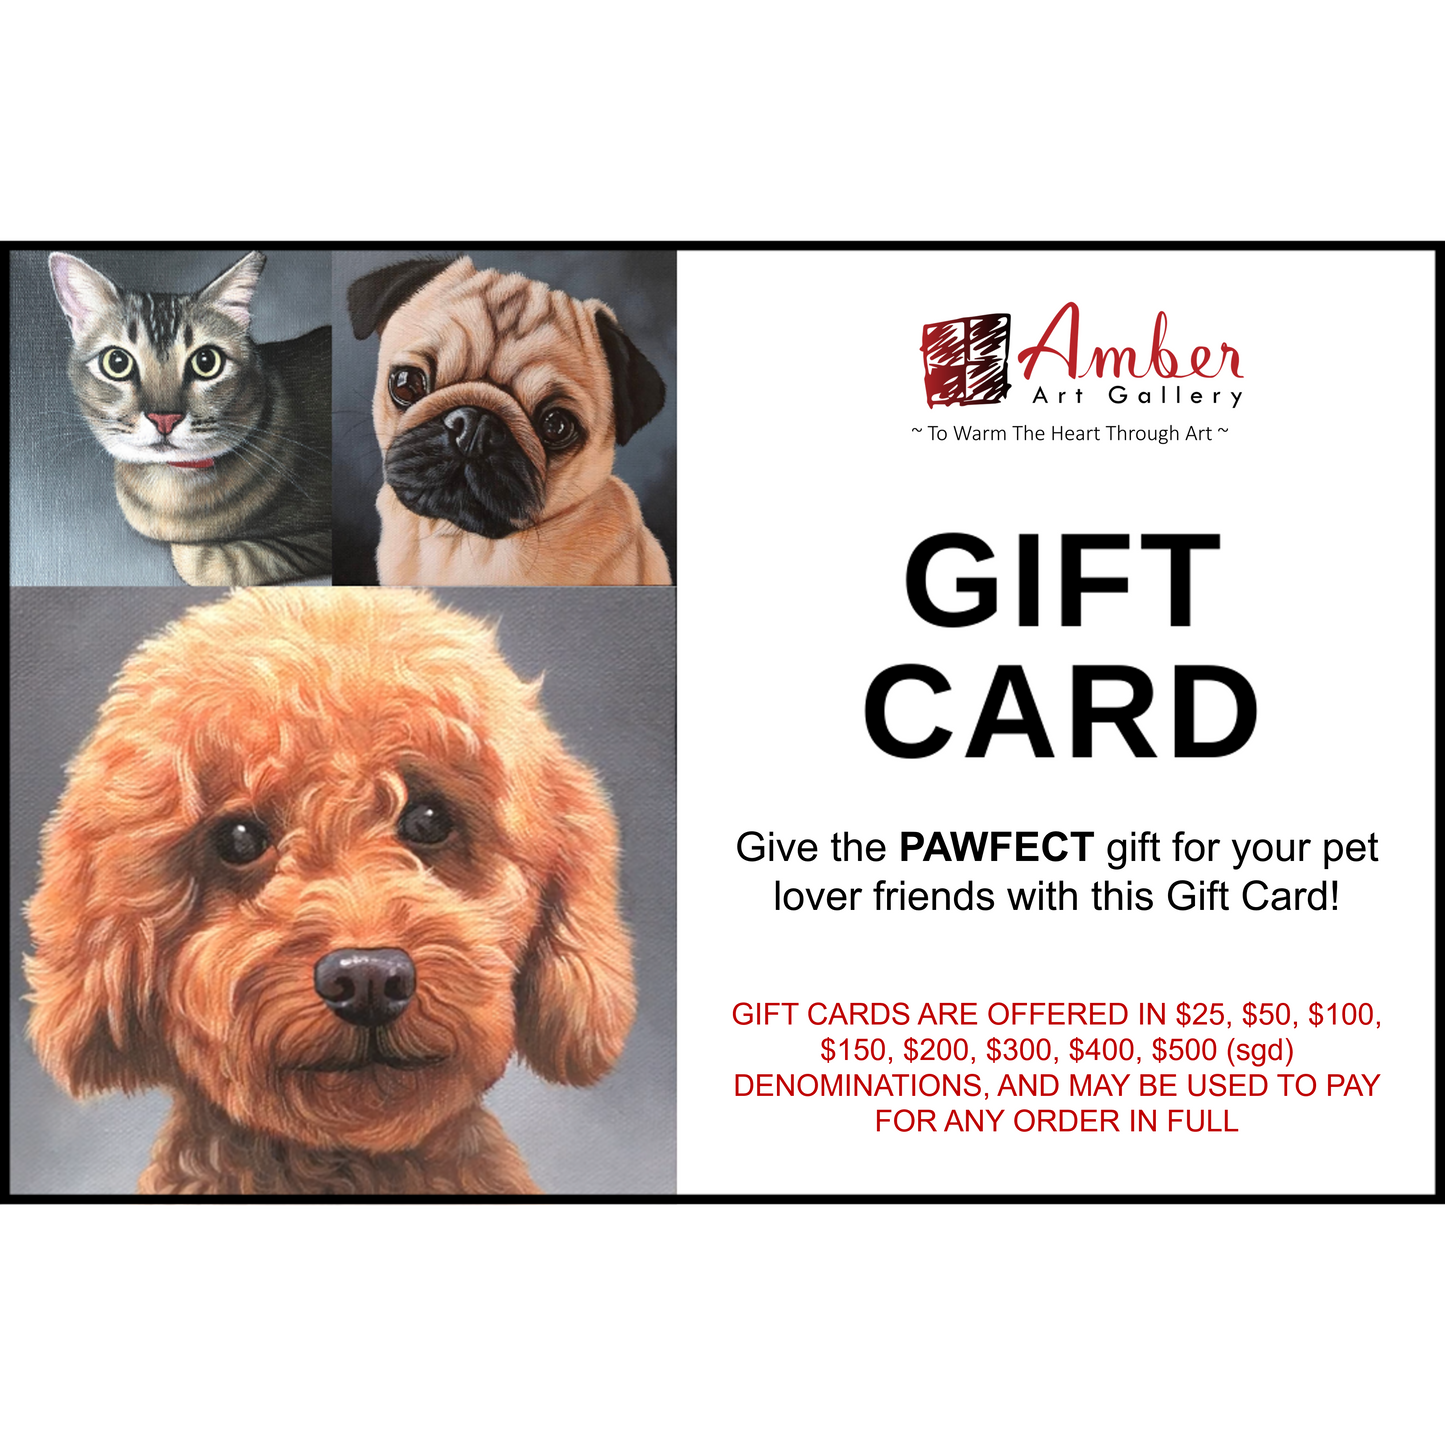 Amber Art Gallery Gift Card